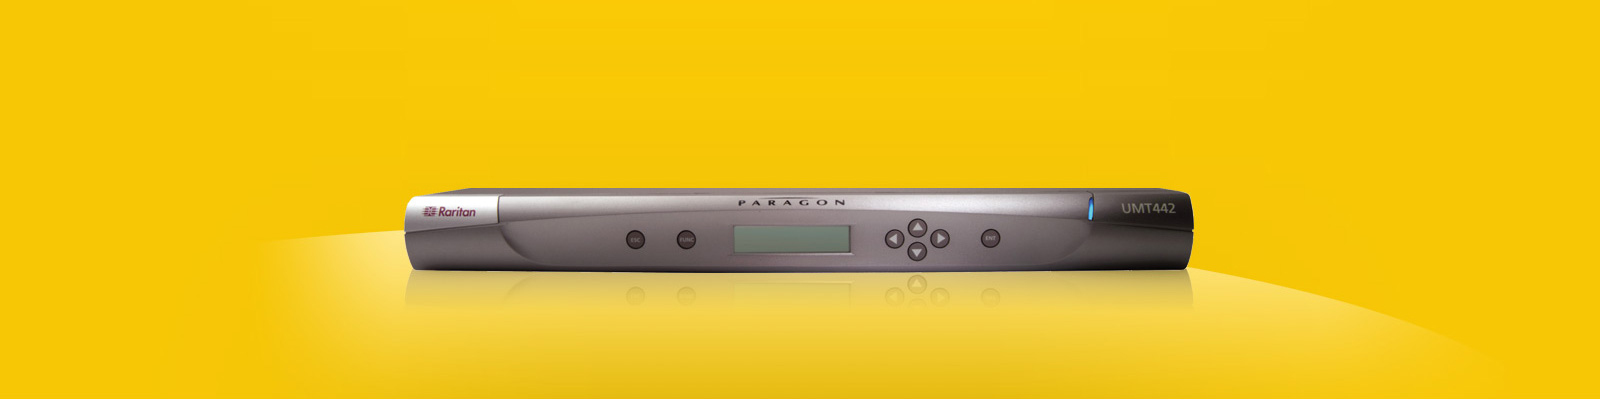 Raritan Paragon 2 User, 42 Port High Density CATx KVM Switch - Multi-Platform: PS/2, USB, Sun and SGI